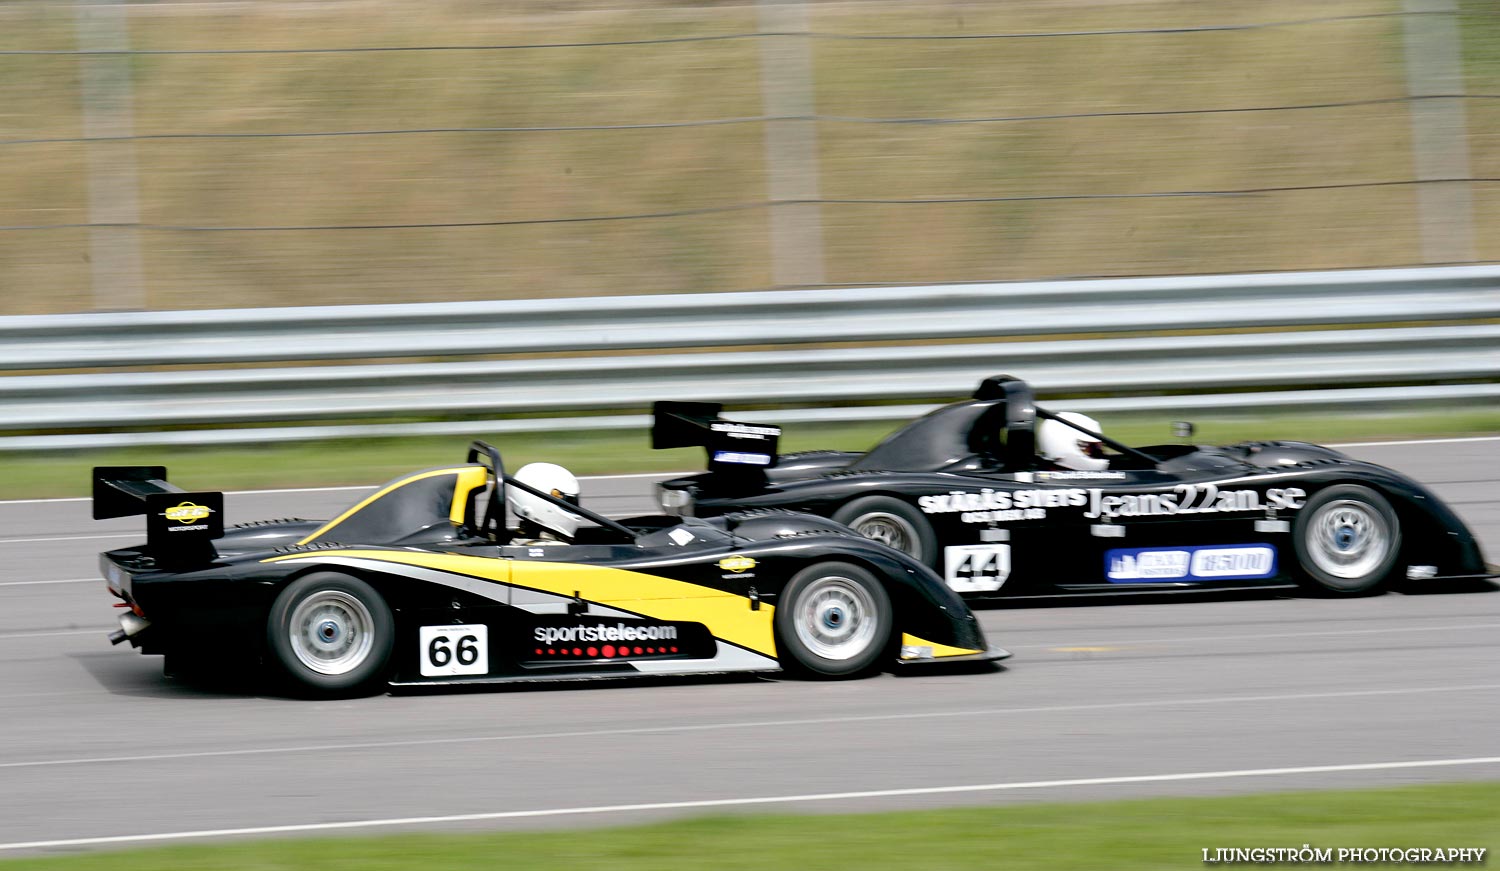 SSK Raceweek,mix,Kinnekulle Ring,Götene,Sverige,Motorsport,,2009,107569